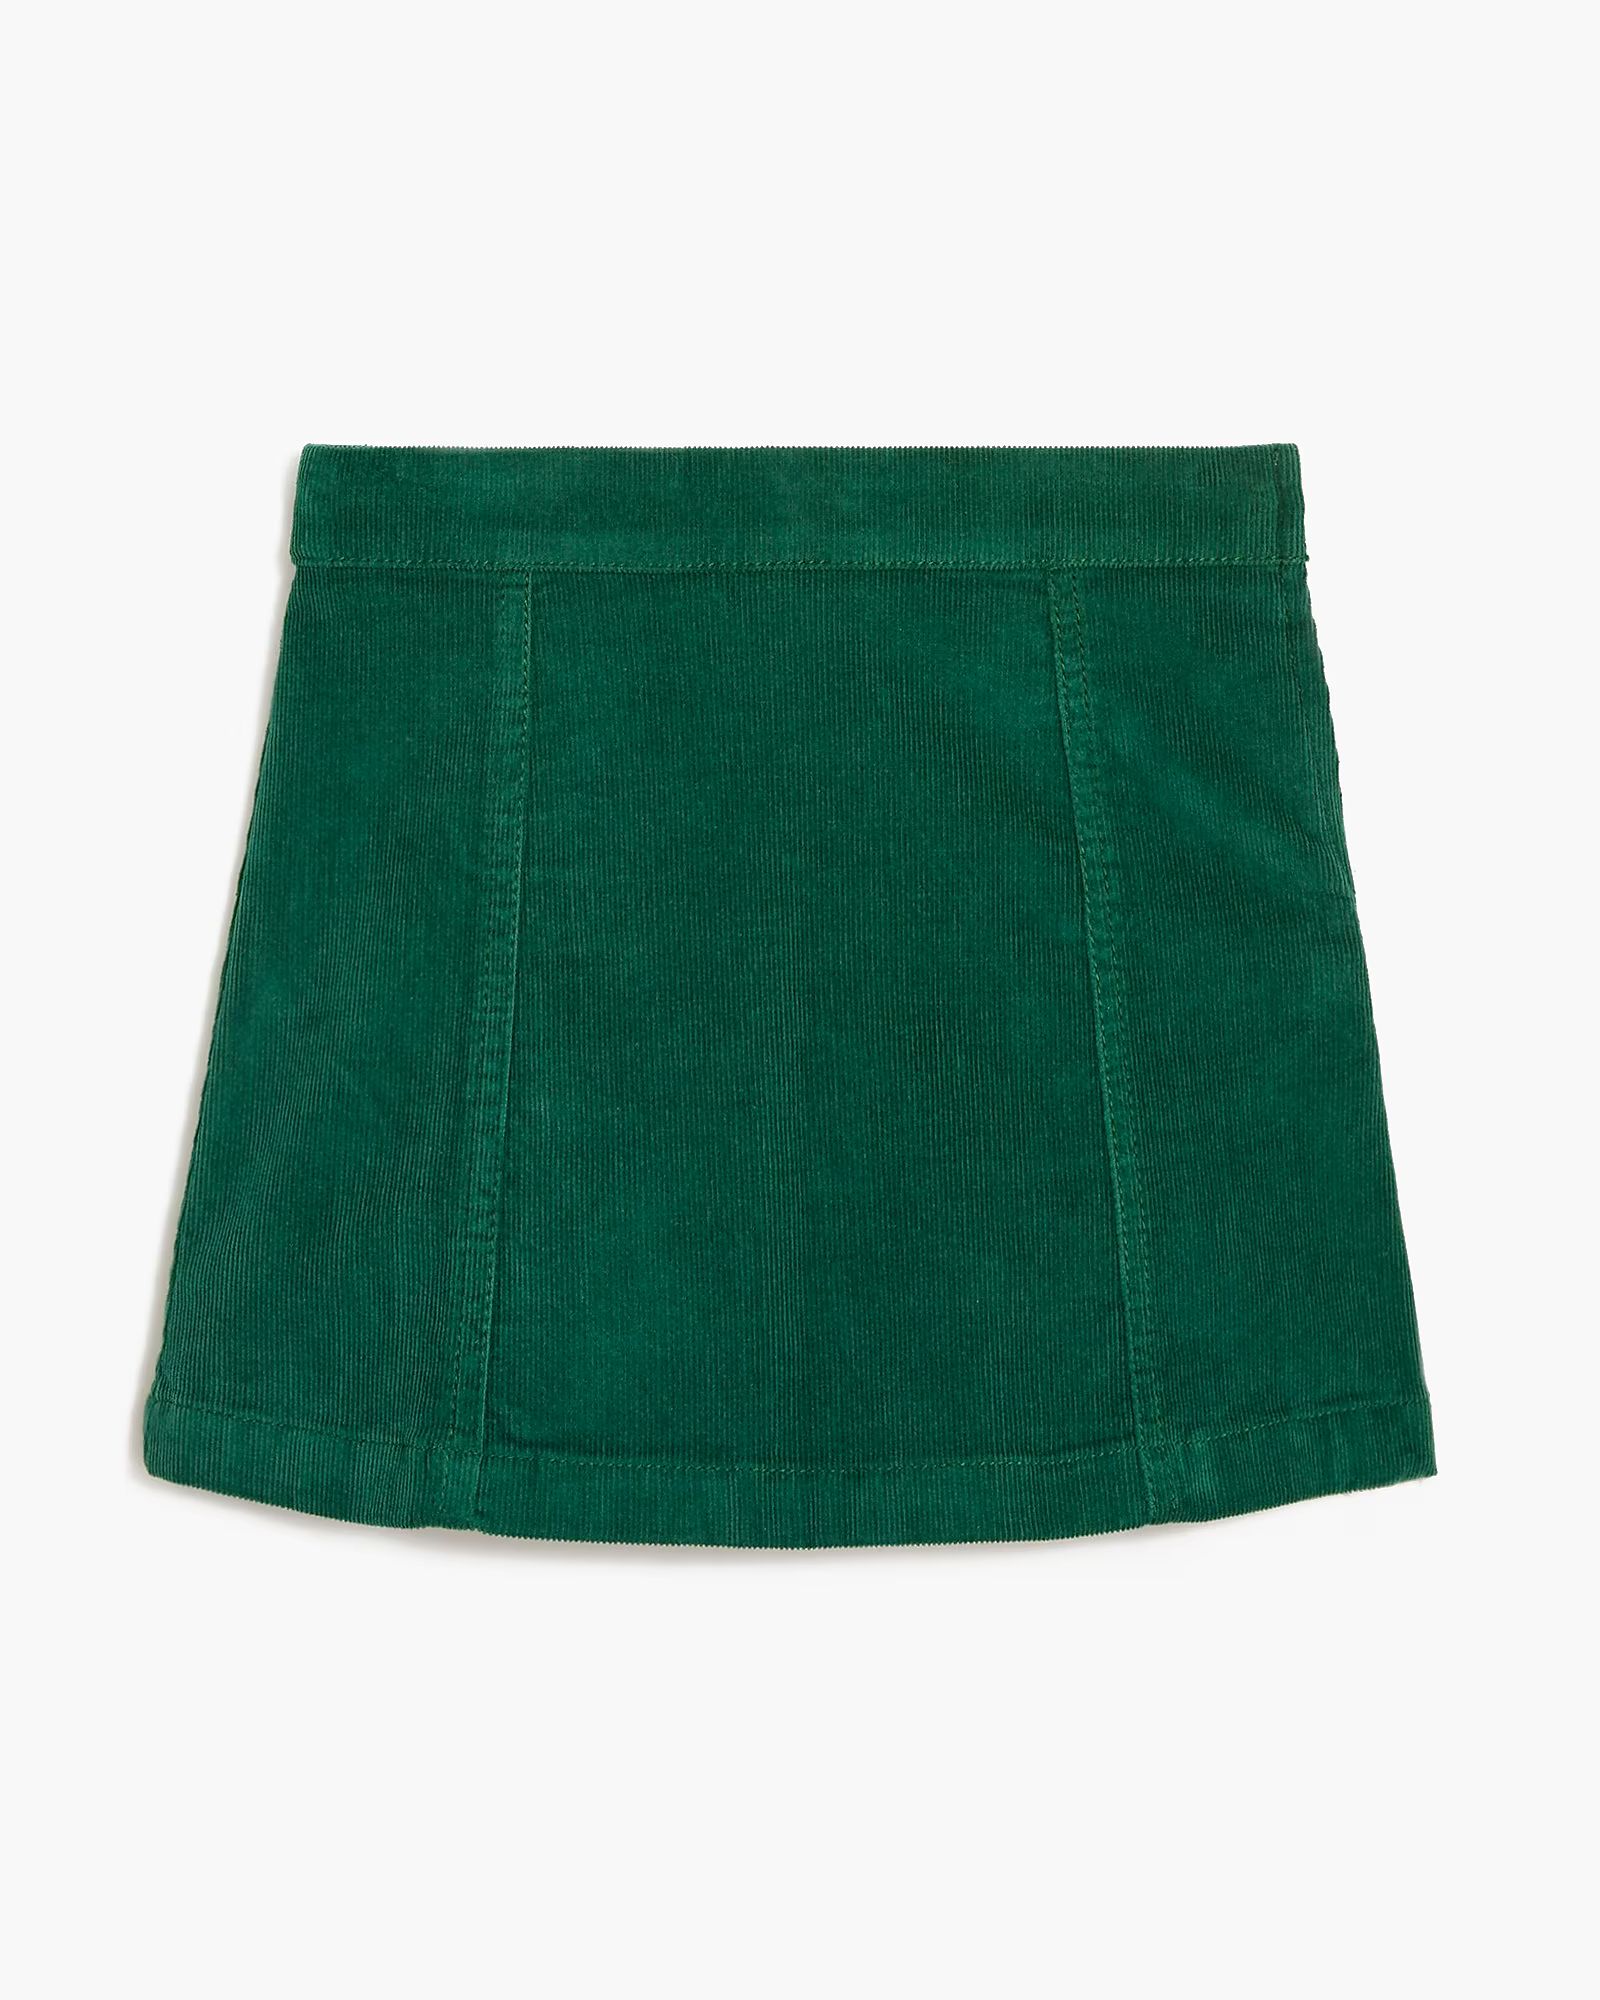 Girls' corduroy A-line skirt | J.Crew Factory